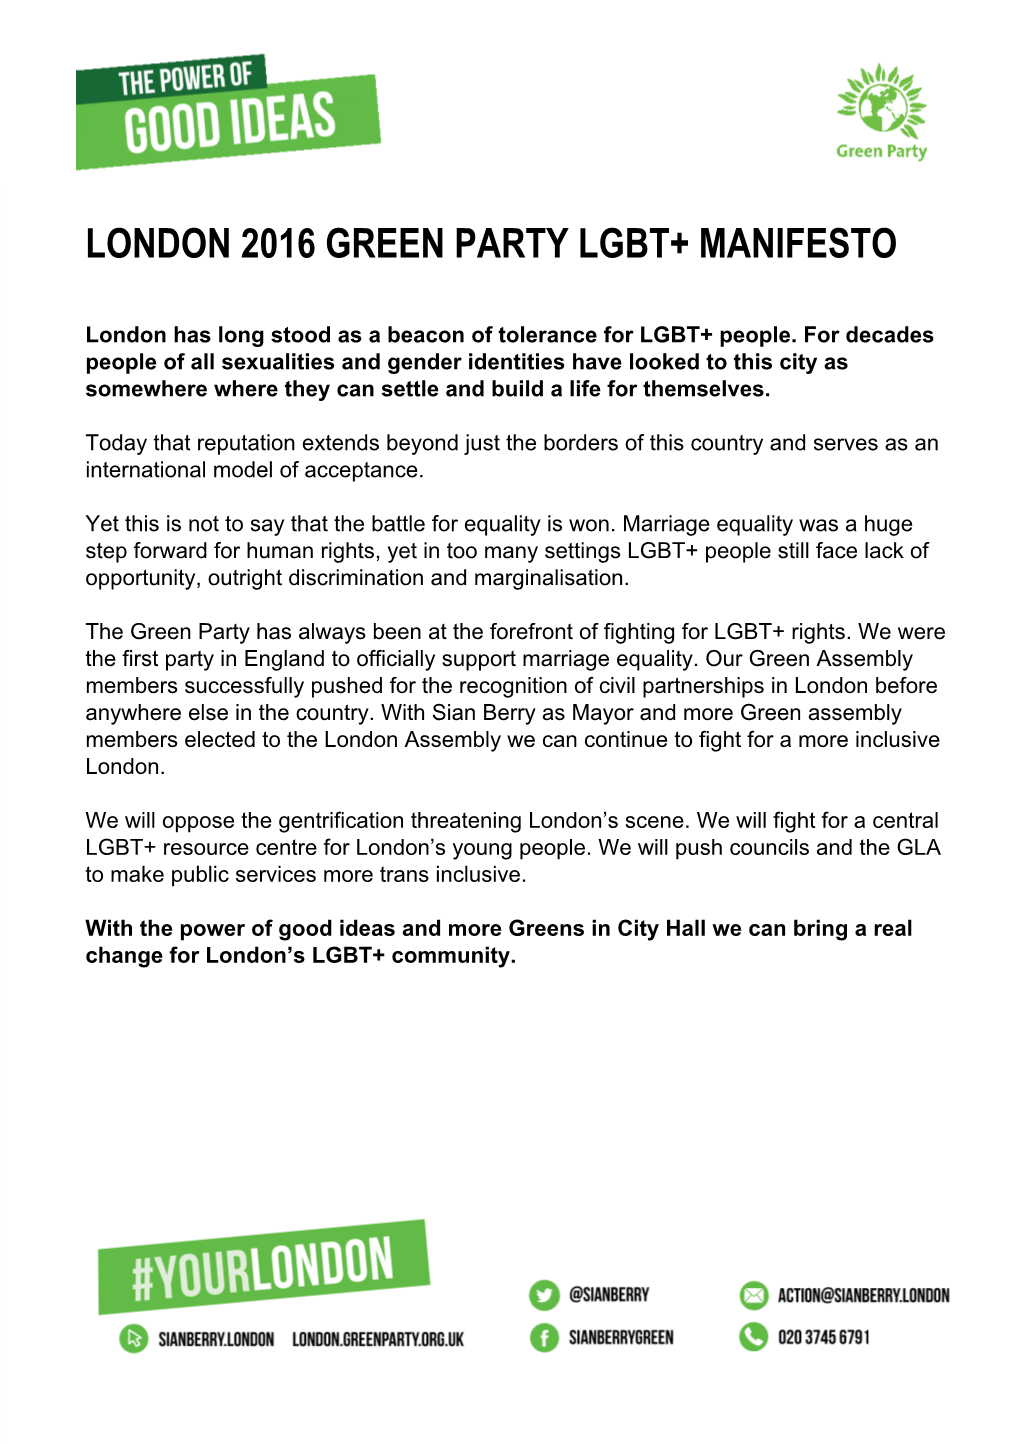 London Green Party LGBT+ Manifesto 2016